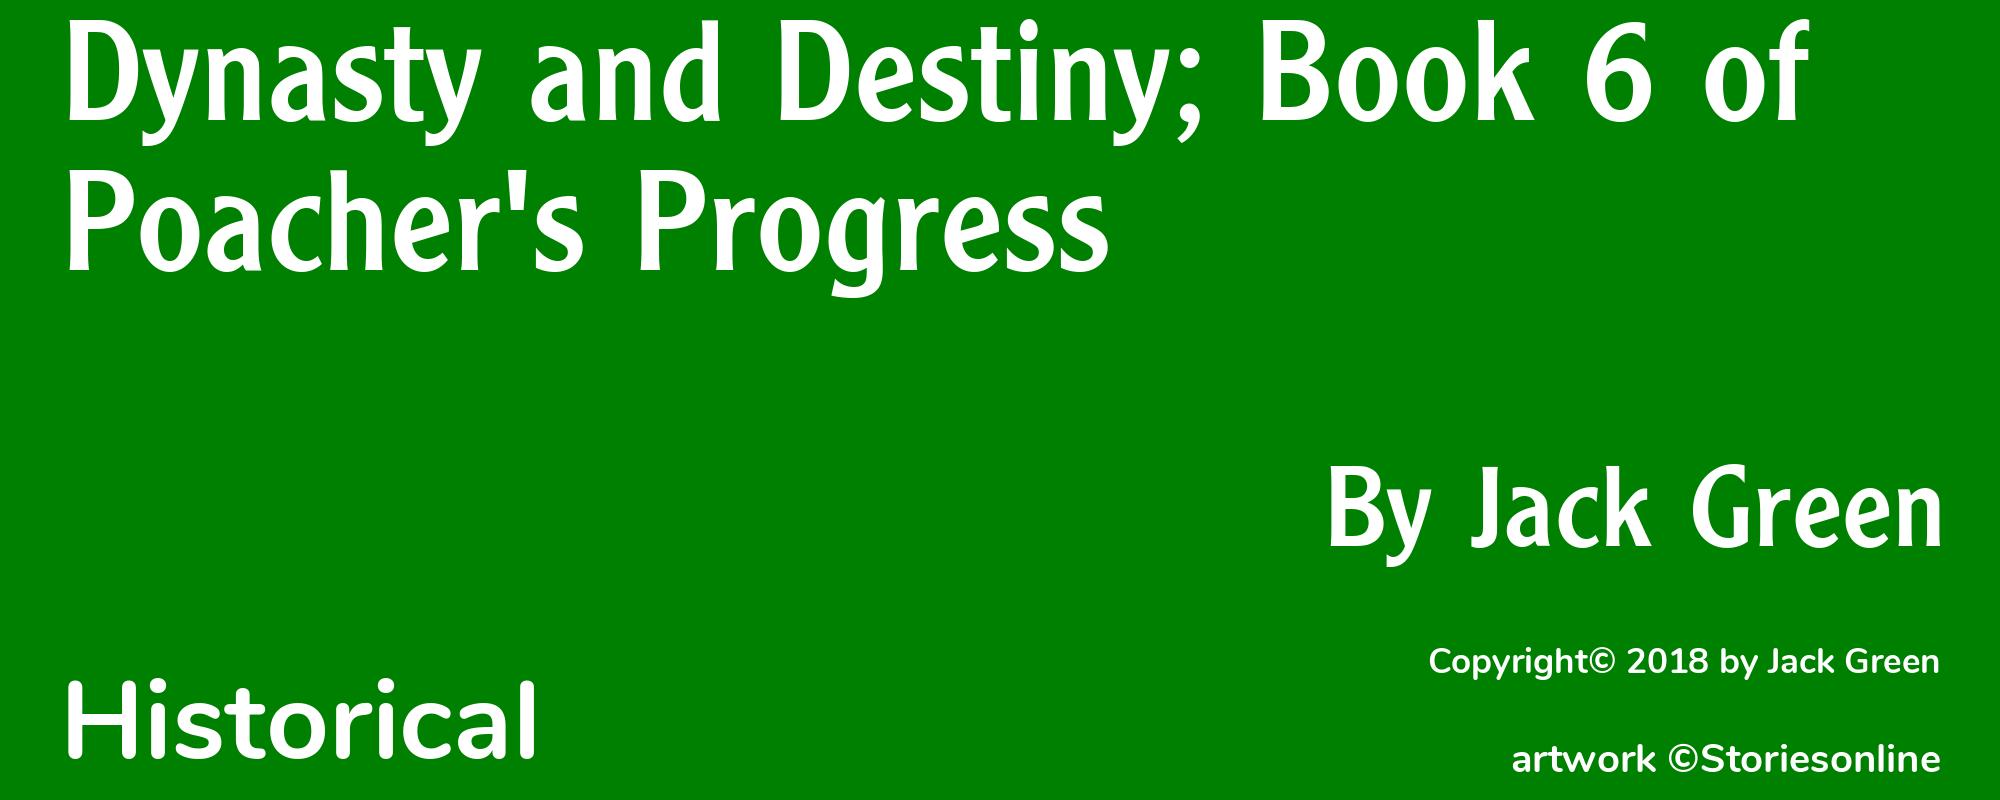 Dynasty and Destiny; Book 6 of Poacher's Progress - Cover